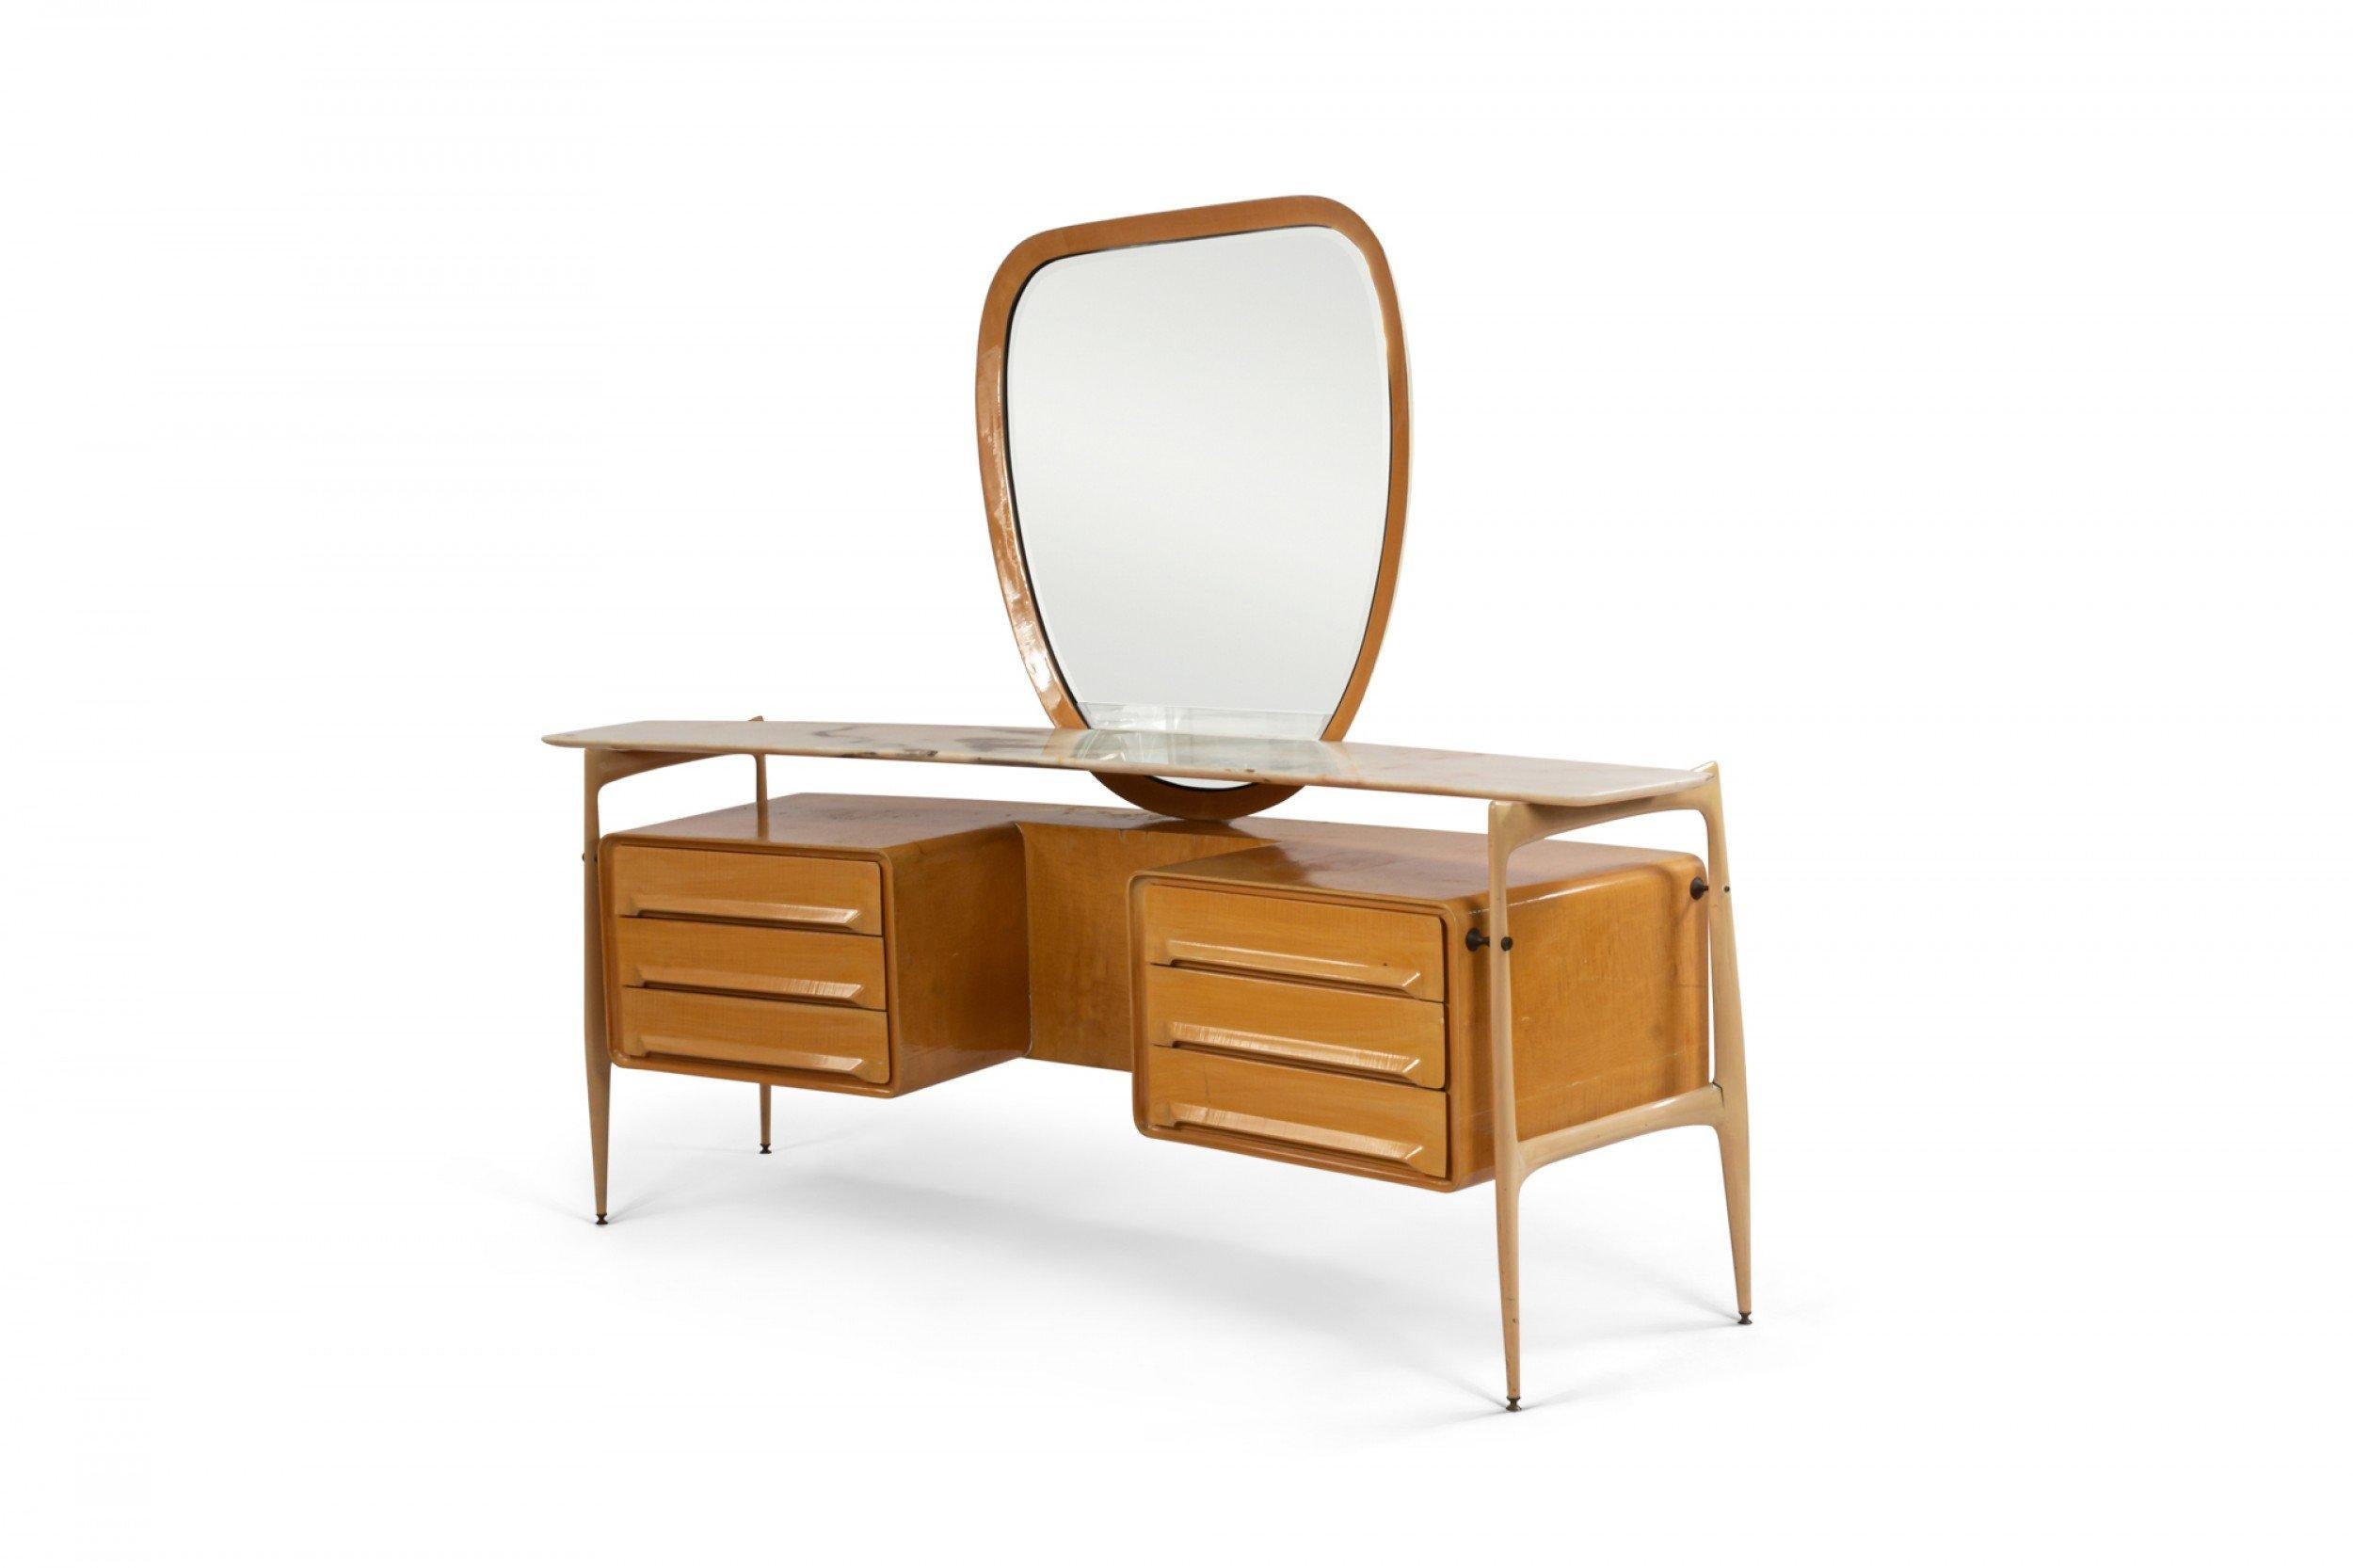 Italian mid-century (Circa 1950) wooden maple vanity with two sets of three drawers and attachable mirror (SILVIO CAVATORTA).
       